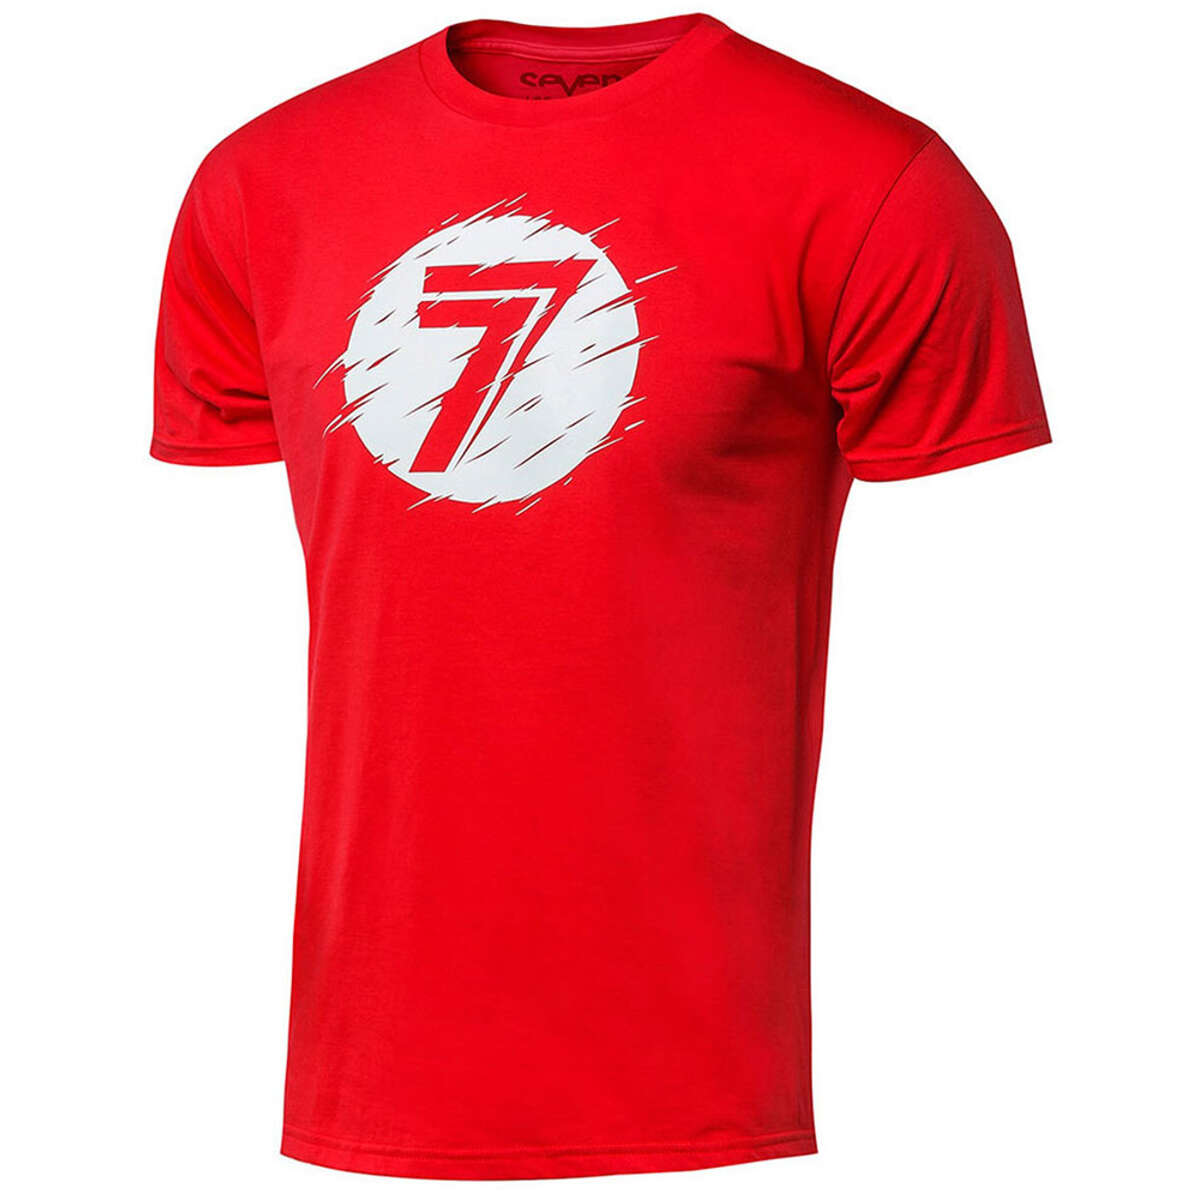 Seven MX Bimbo T-Shirt Youth Dot Red